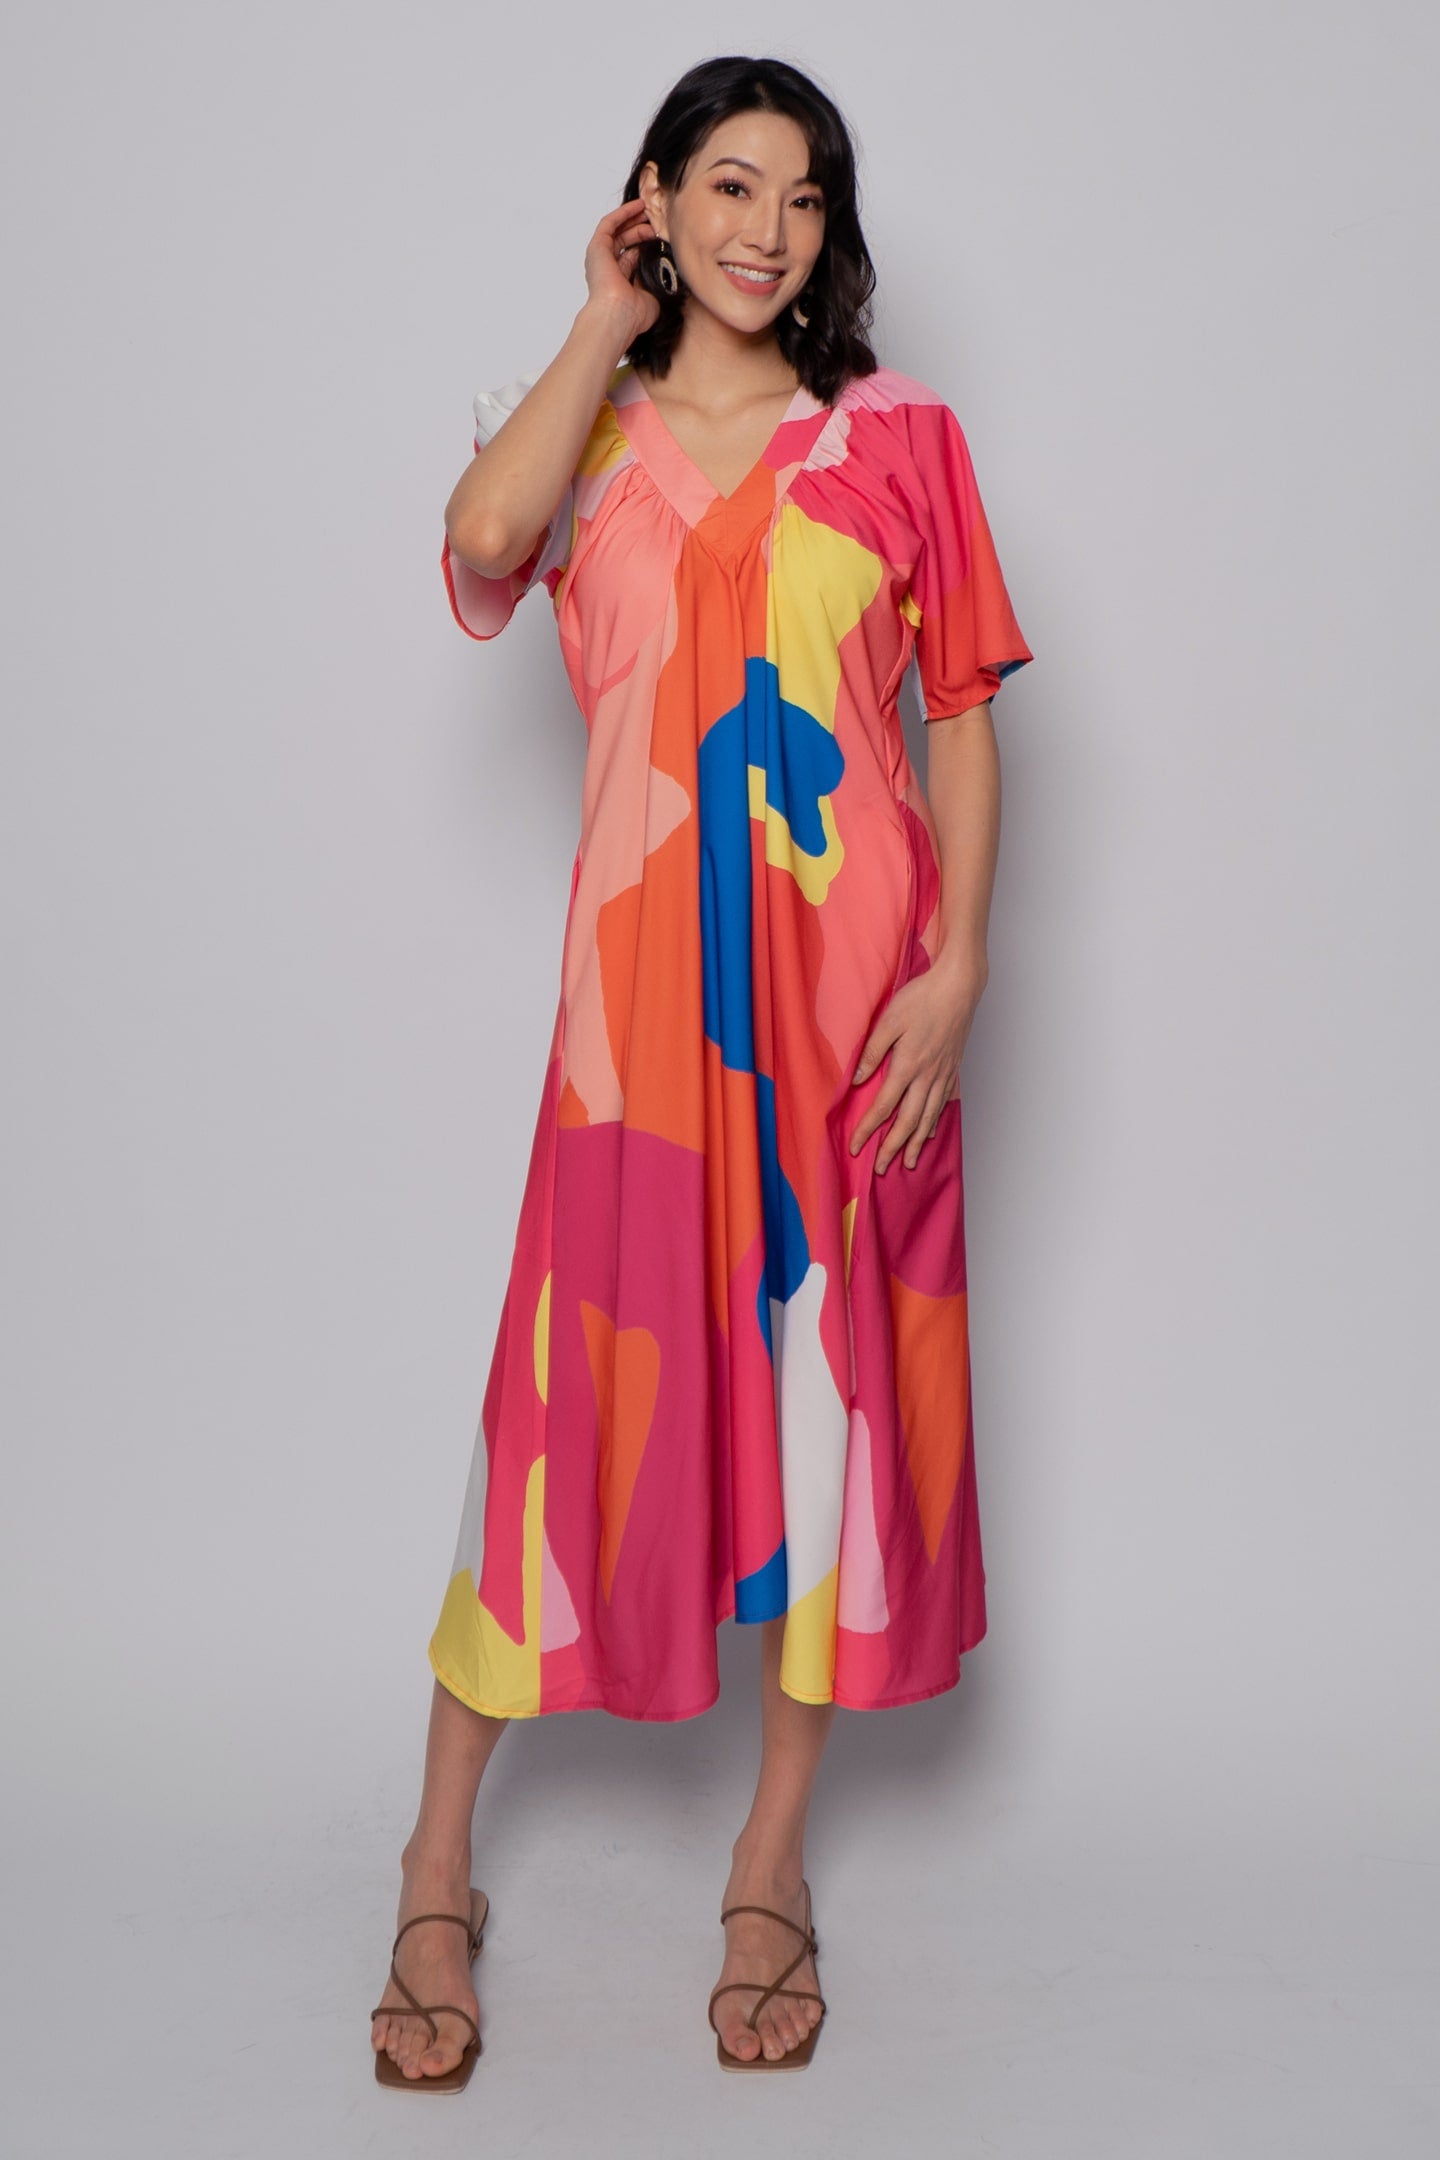 Whitney V Dress in Whirlwind Palette